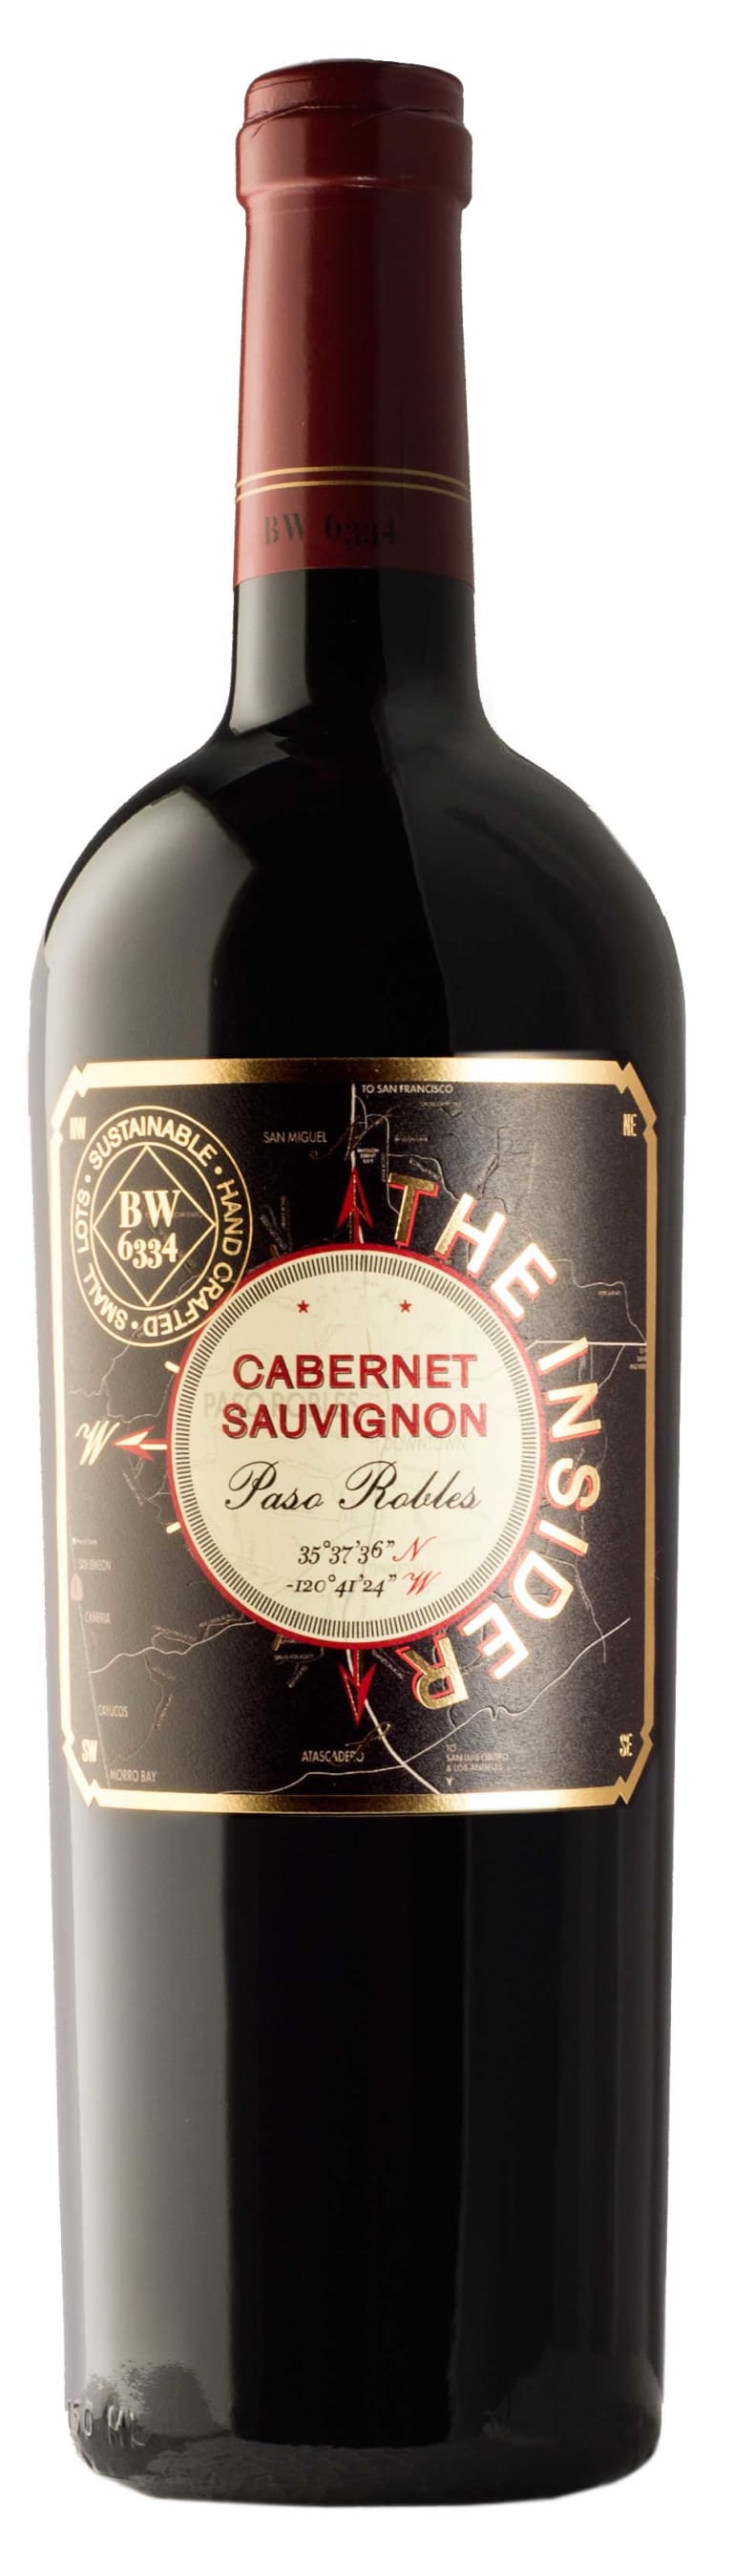 Vinum Cellars Cabernet Sauvignon The Insider Top Secret Single Vineyard 2017